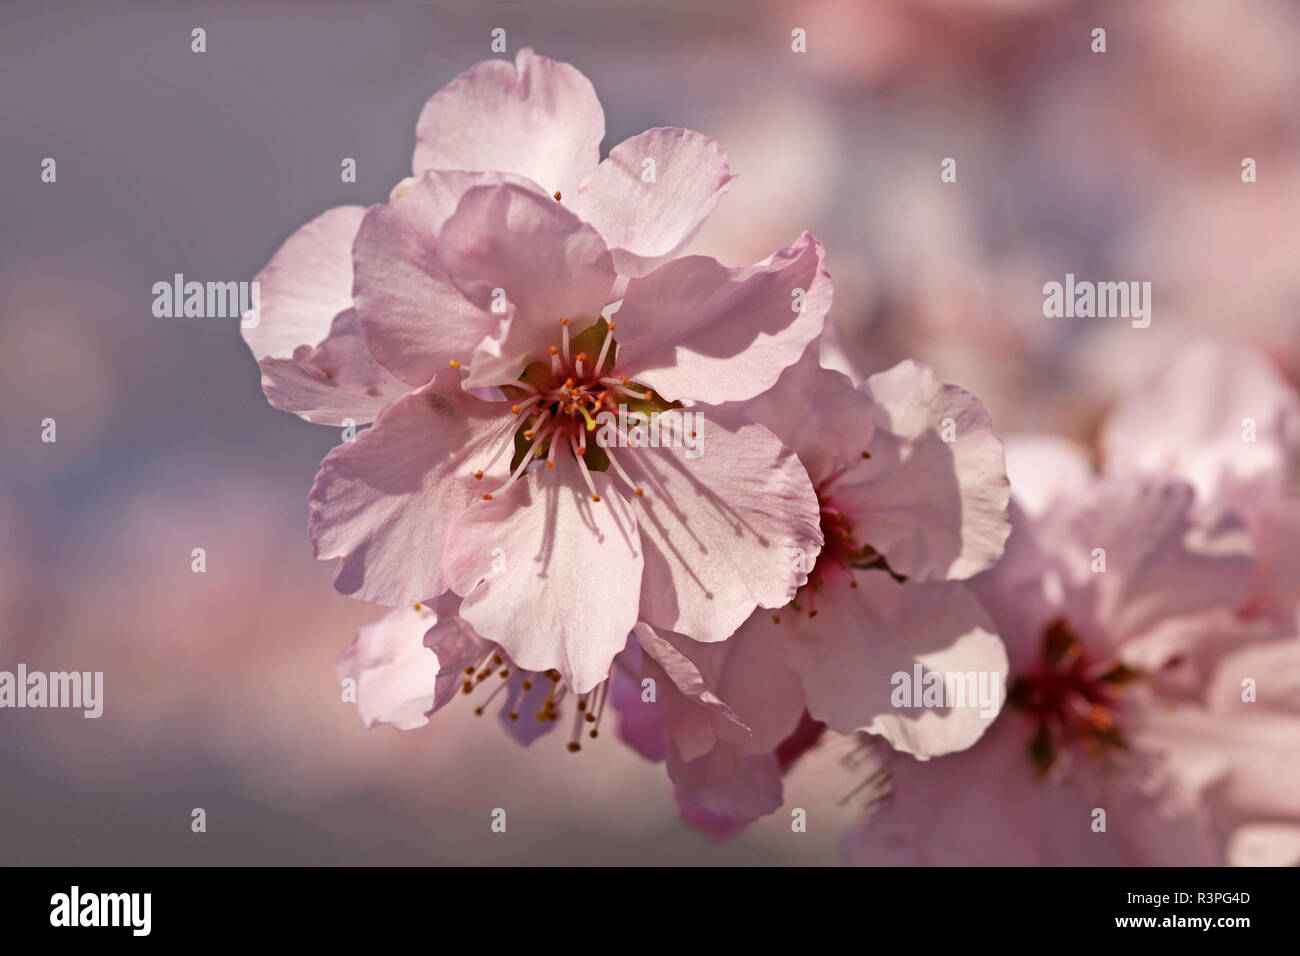 pink and white flowers of genuine sweet almond prunus dulcis Stock Photo